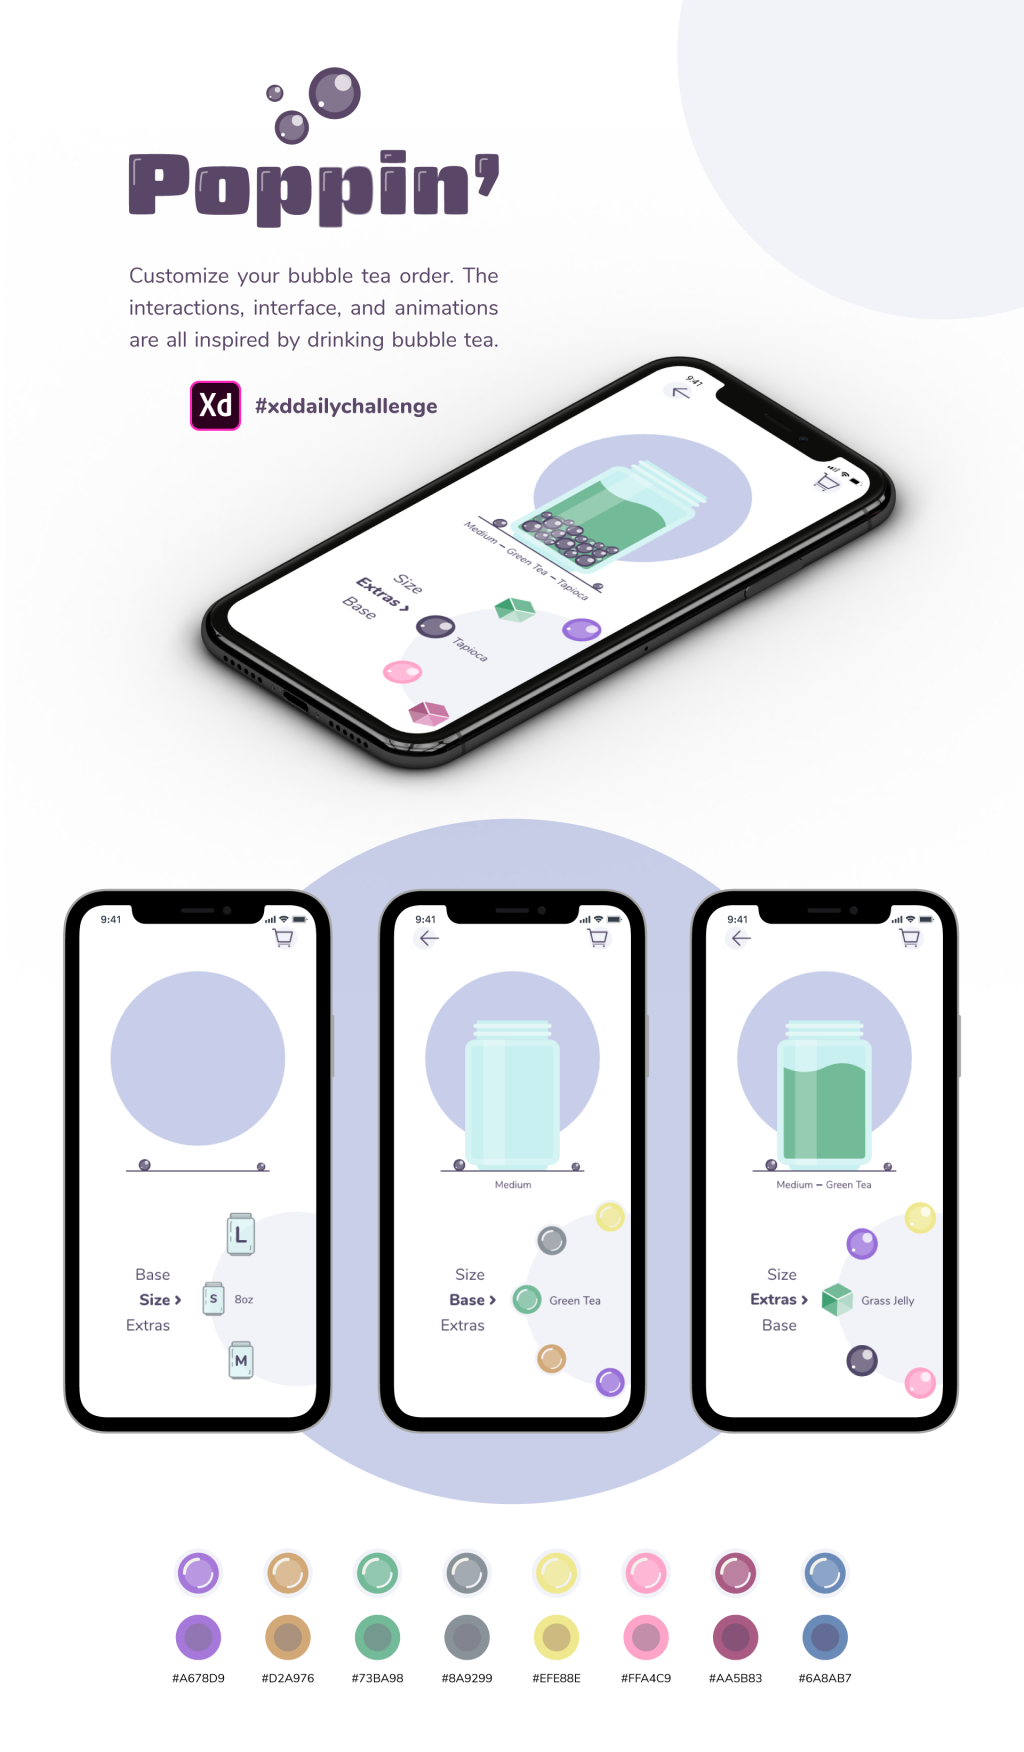 Mockup for a design for a custom bubble tea ordering app.